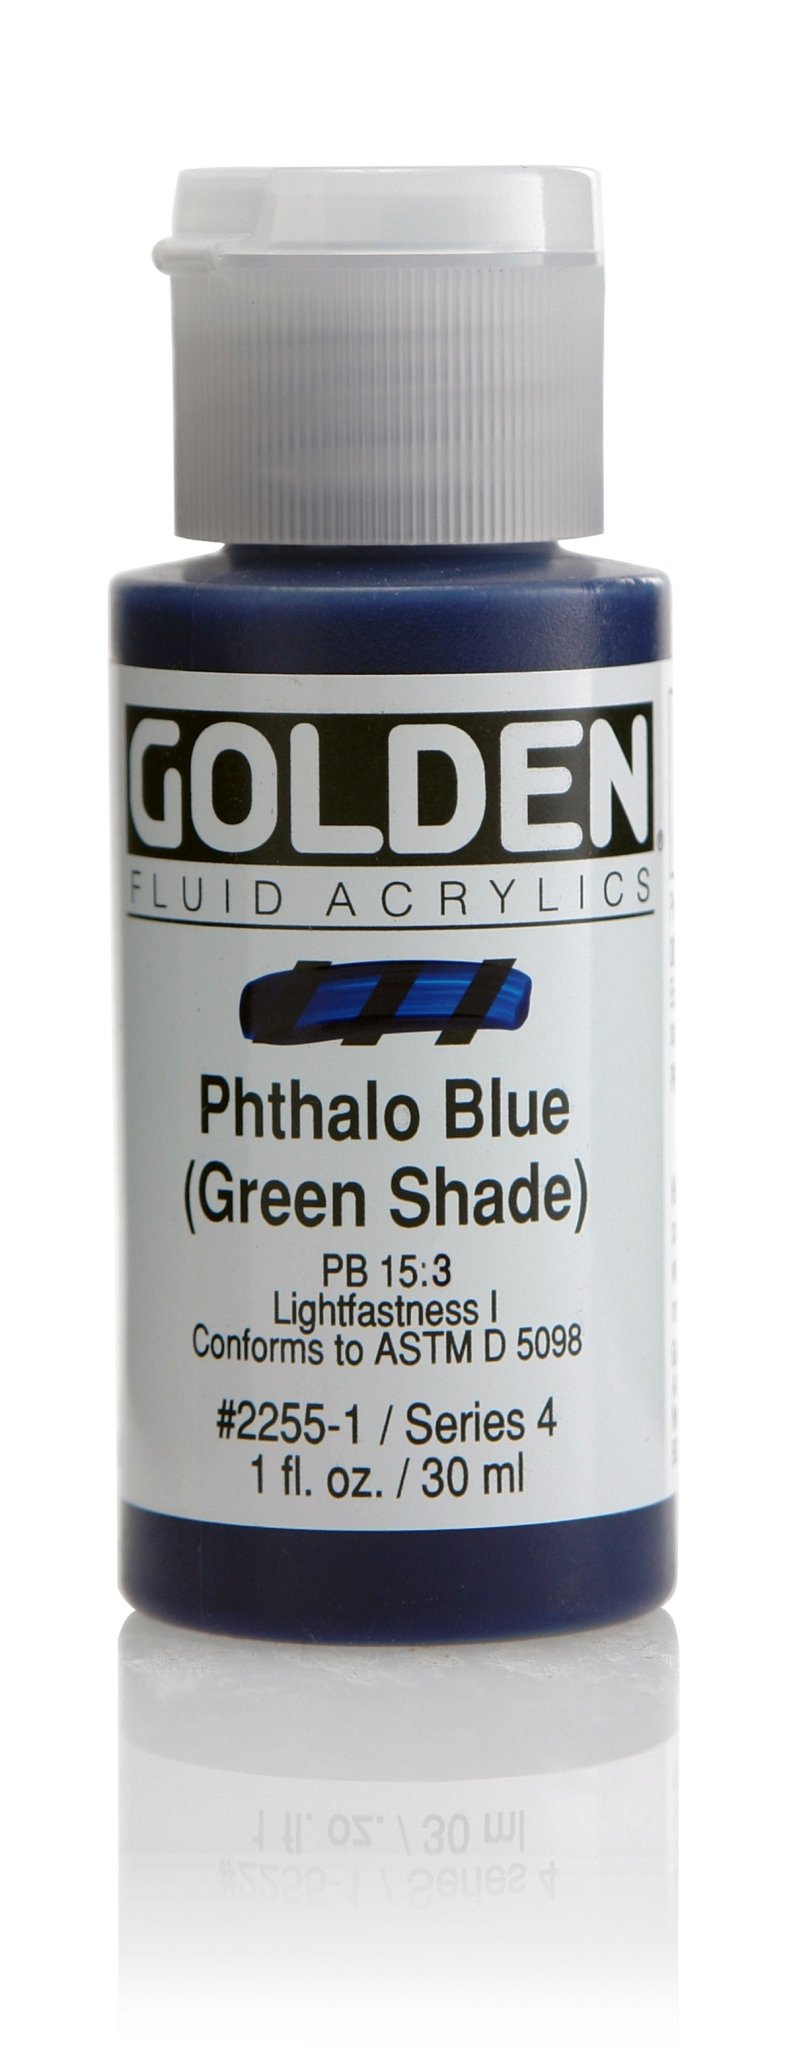 Golden Fluid Acrylics - Phthalo Blue (Green Shade) - 30ml - Create A Little Magic (Pty) Ltd